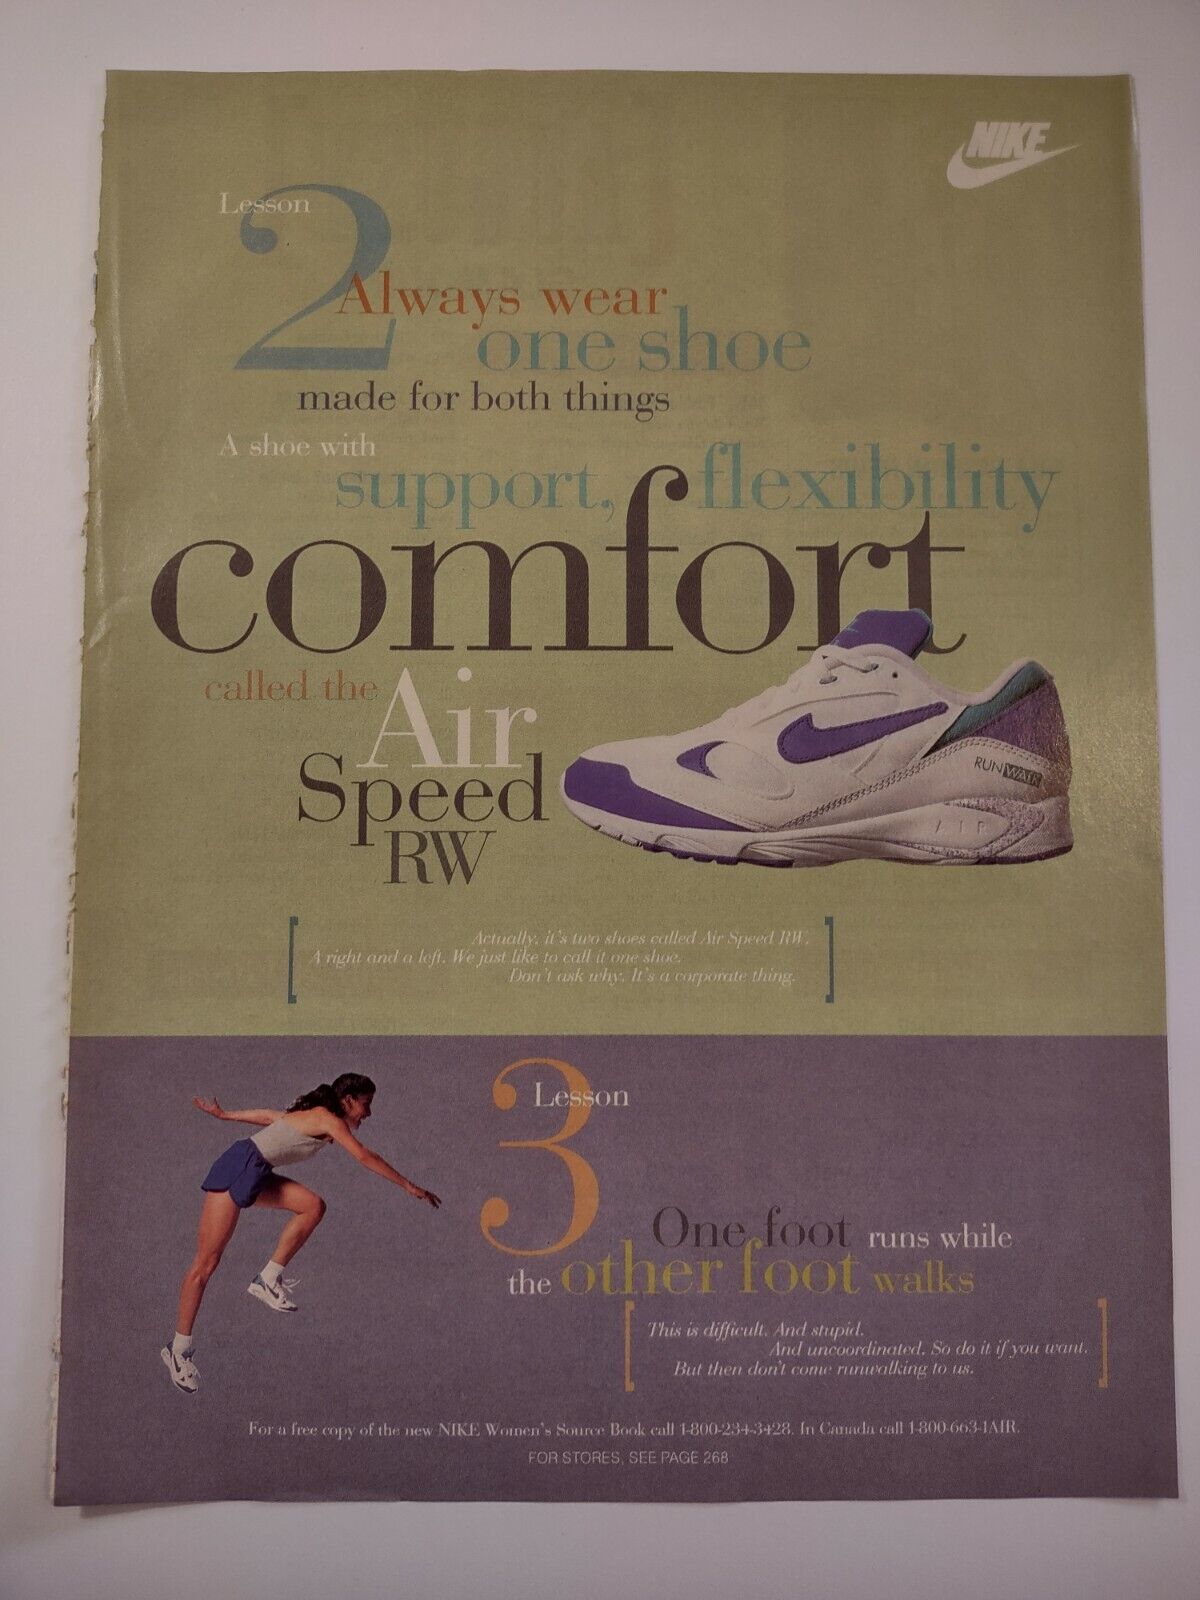 Nike Air Speed RW Sports Shoes Vintage 1990s Print Ad